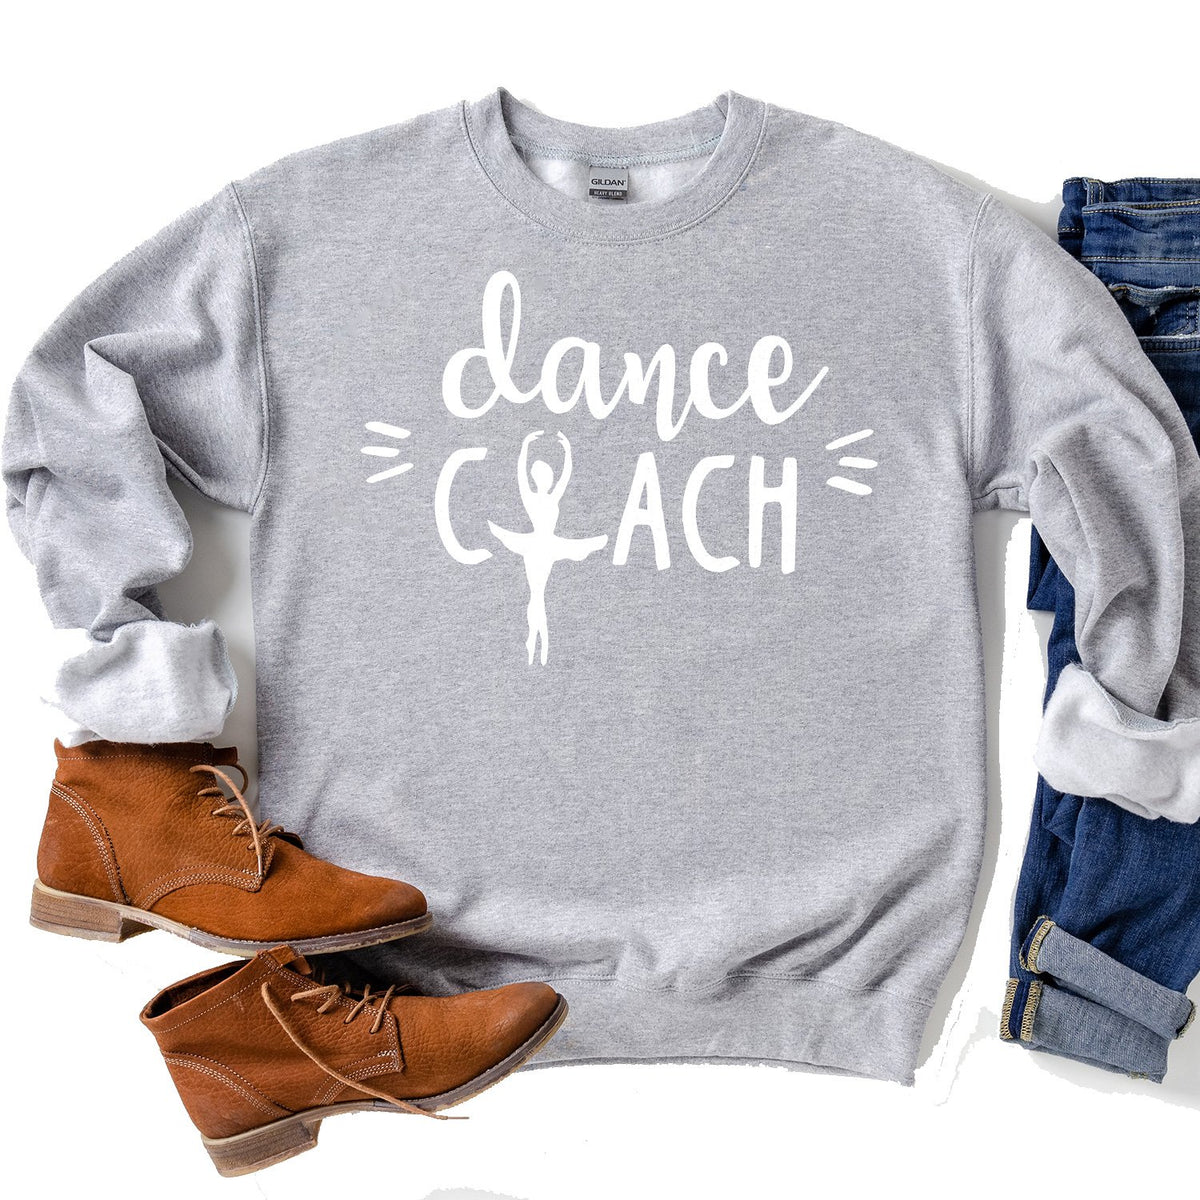 Dance Coach - Long Sleeve Heavy Crewneck Sweatshirt